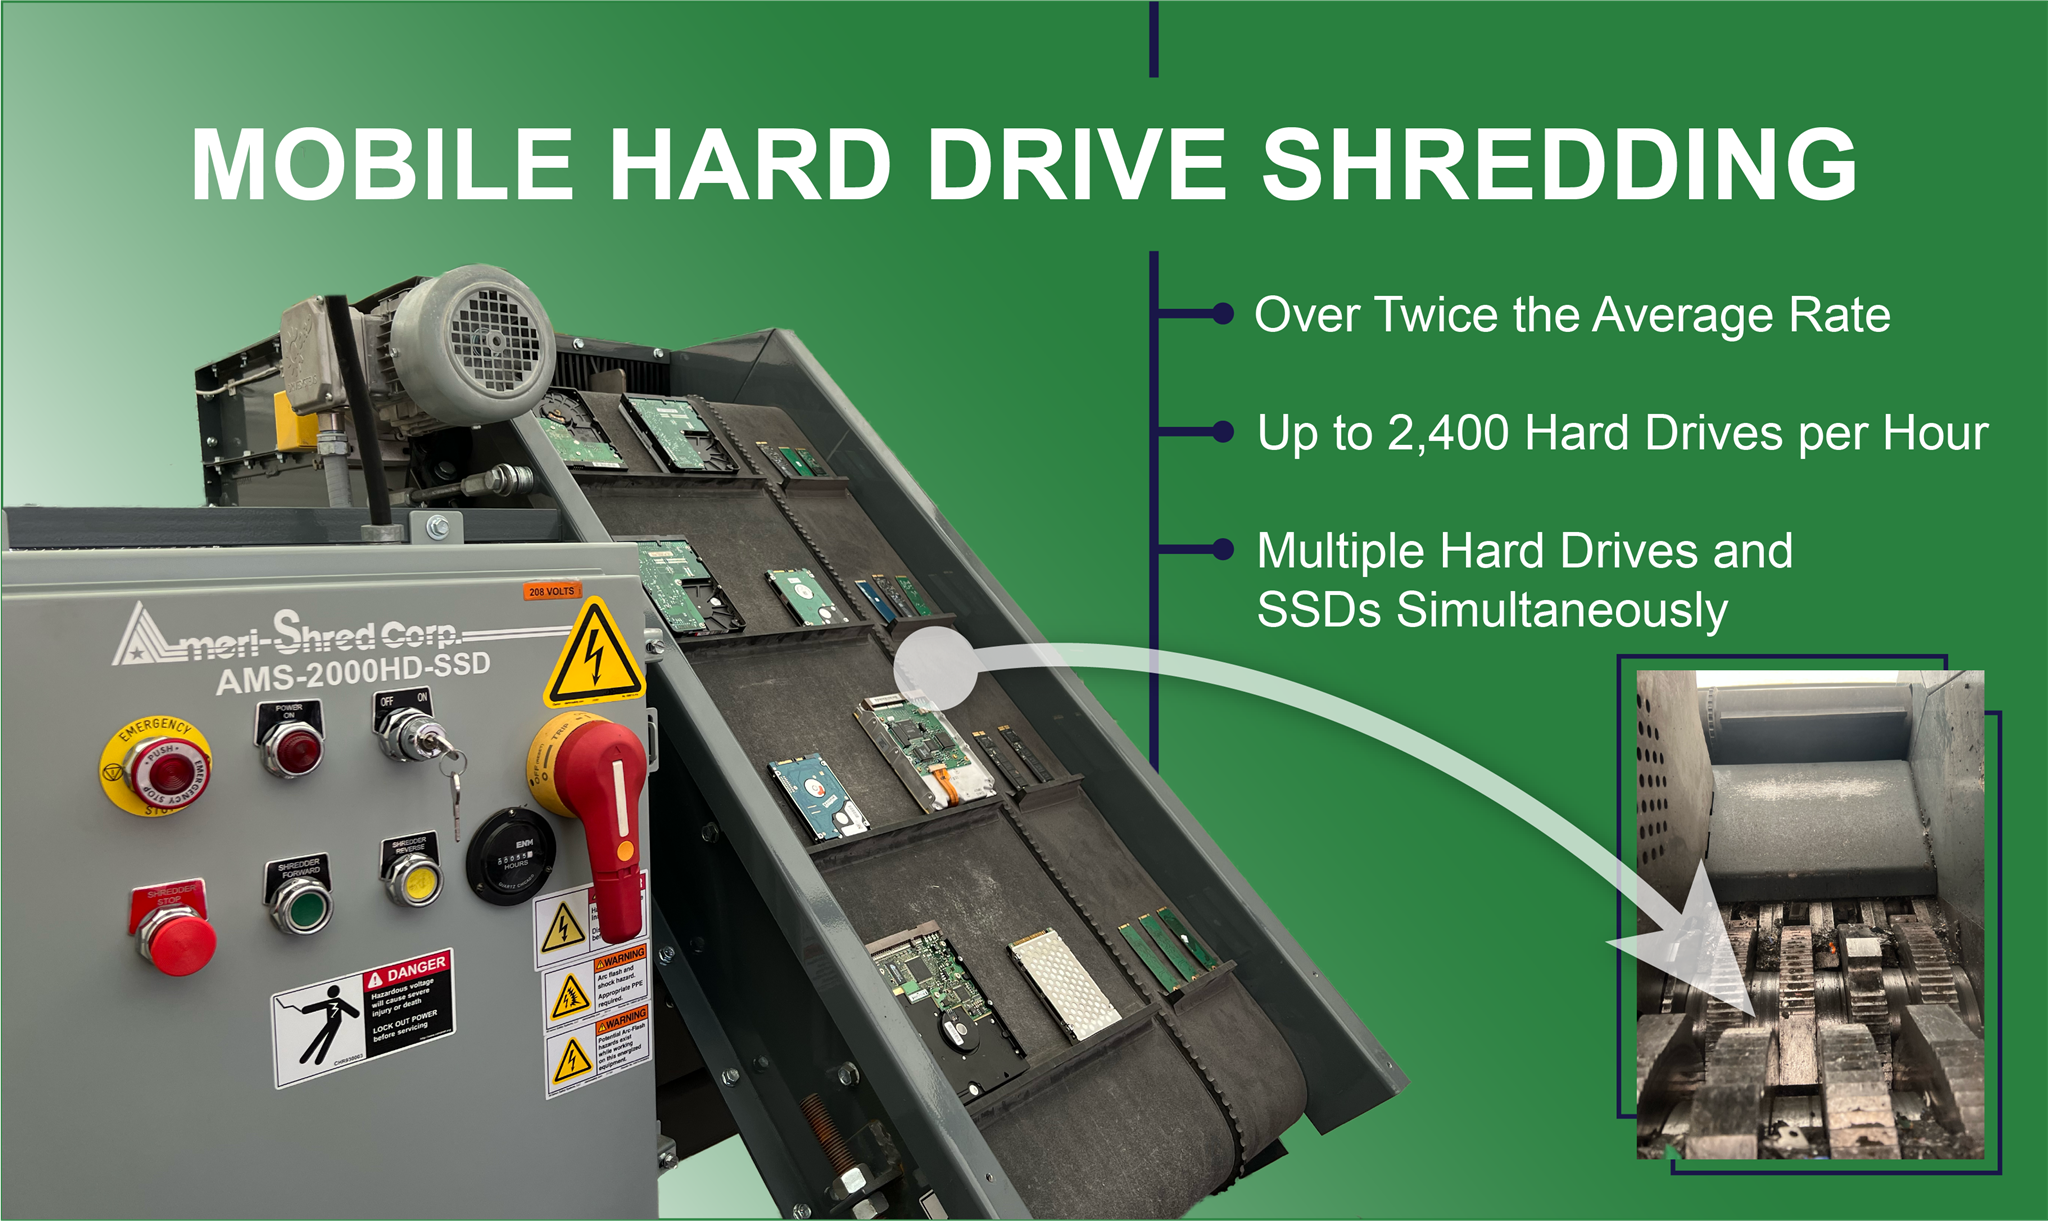 HDD-SSD Shredders Series 1 - Ameri-Shred Corp.